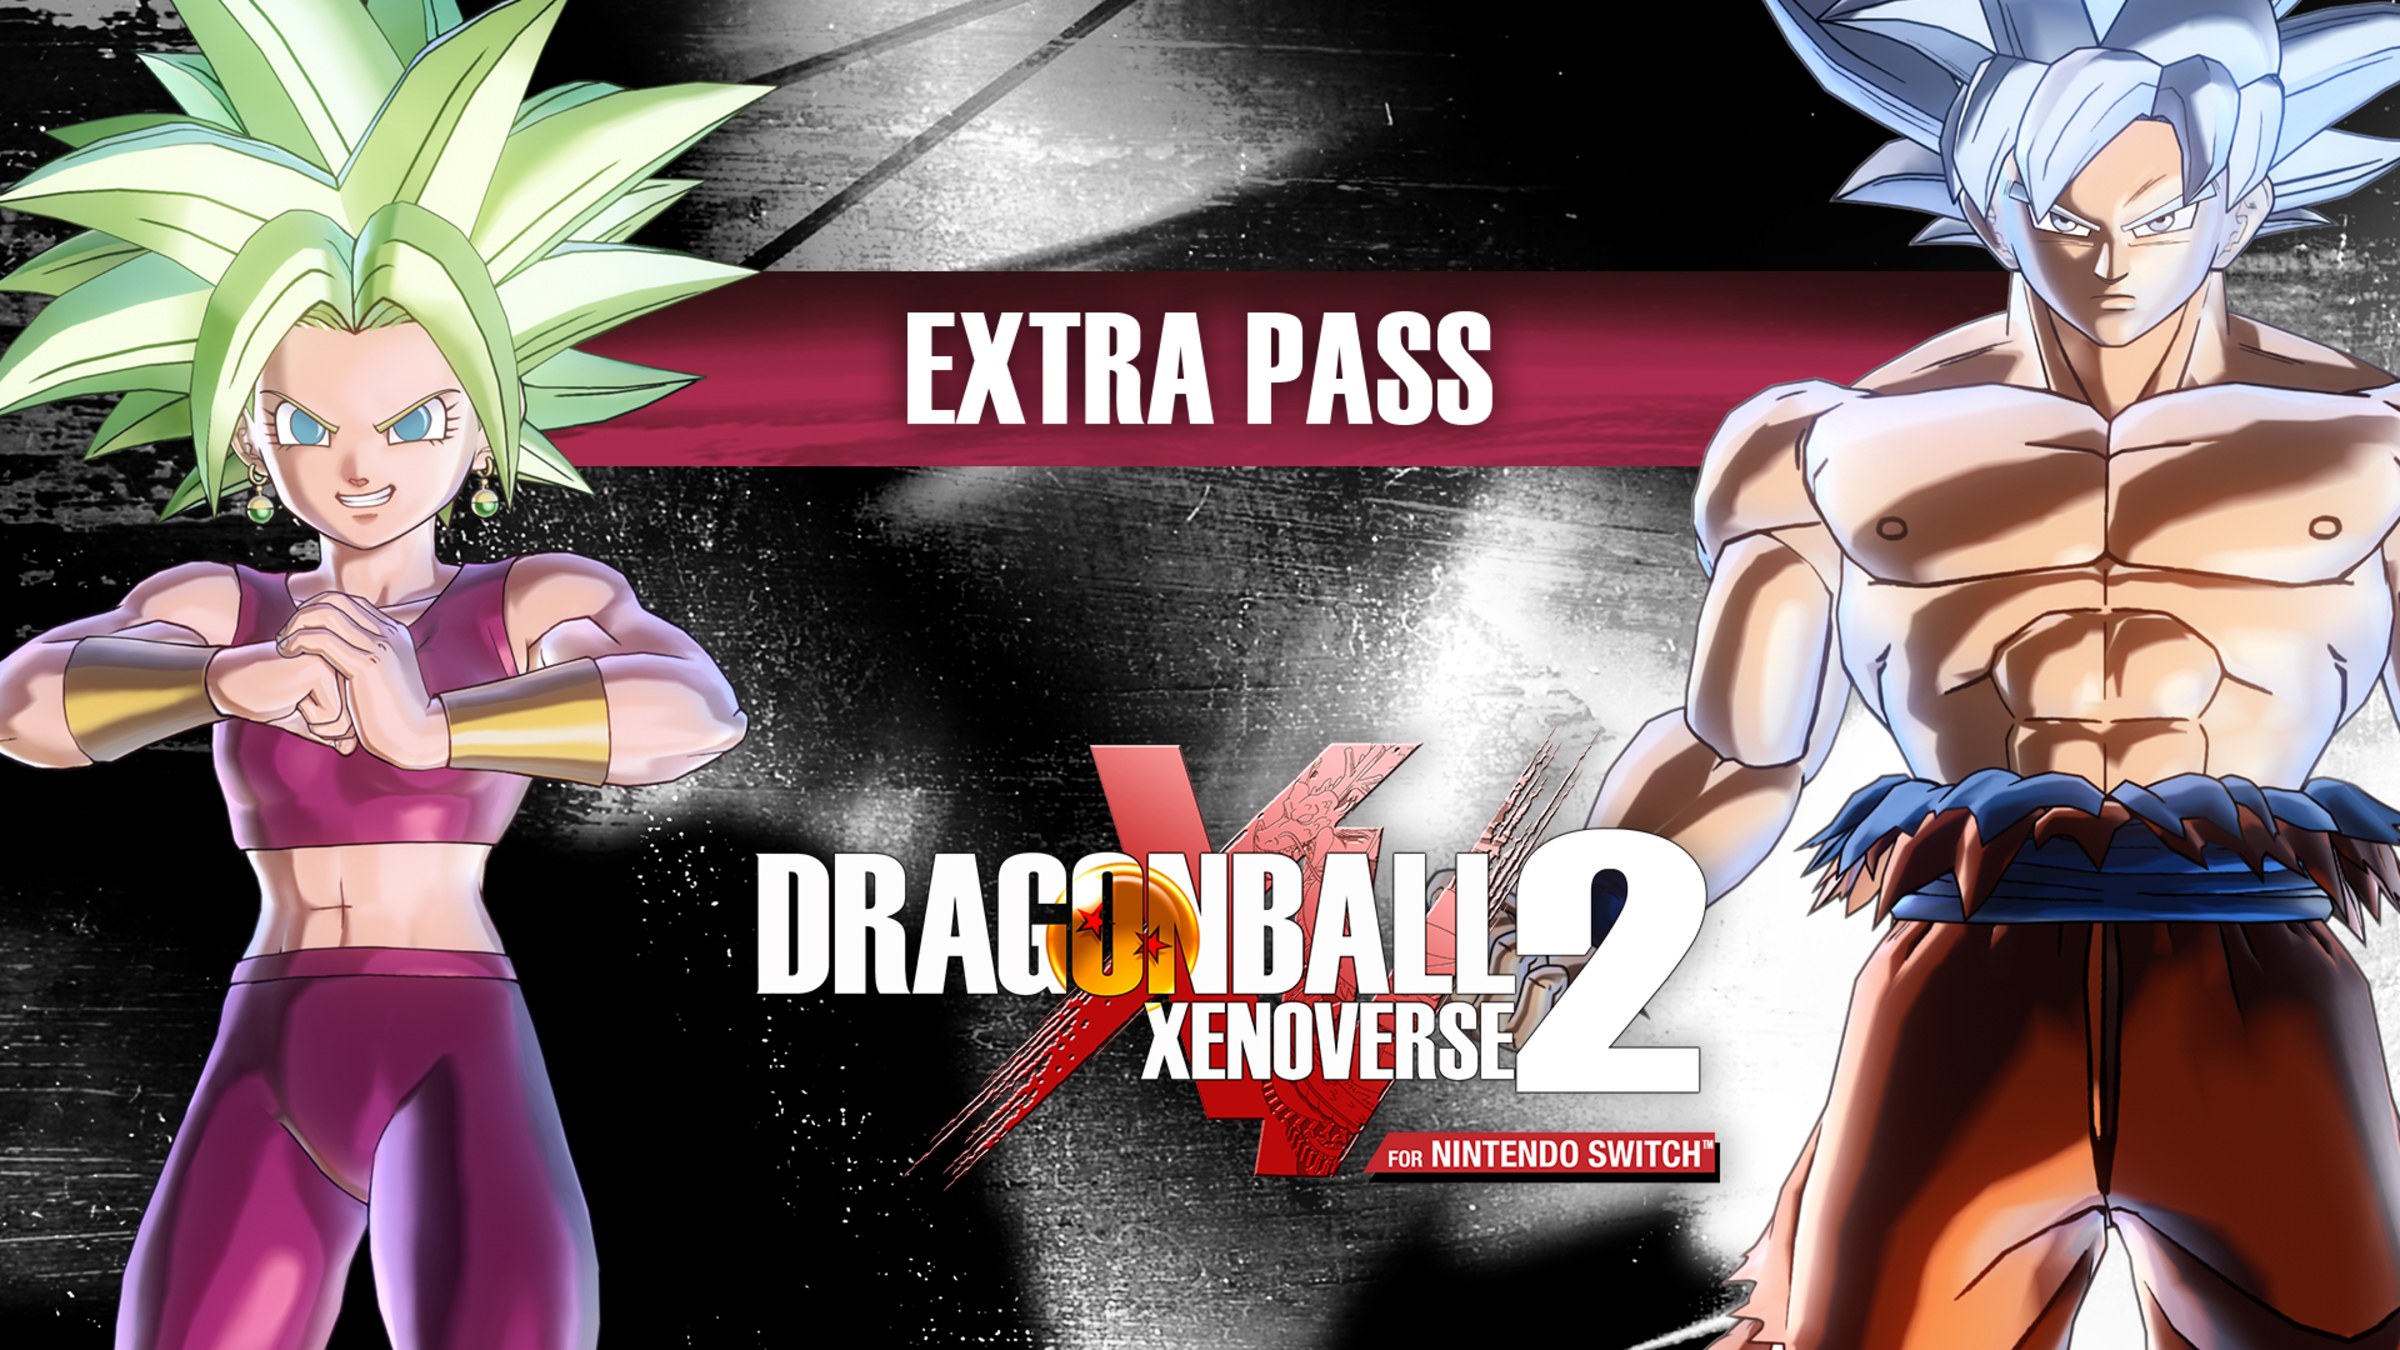 BALL XENOVERSE 2 - Extra Pass for Nintendo Switch - Nintendo Official Site